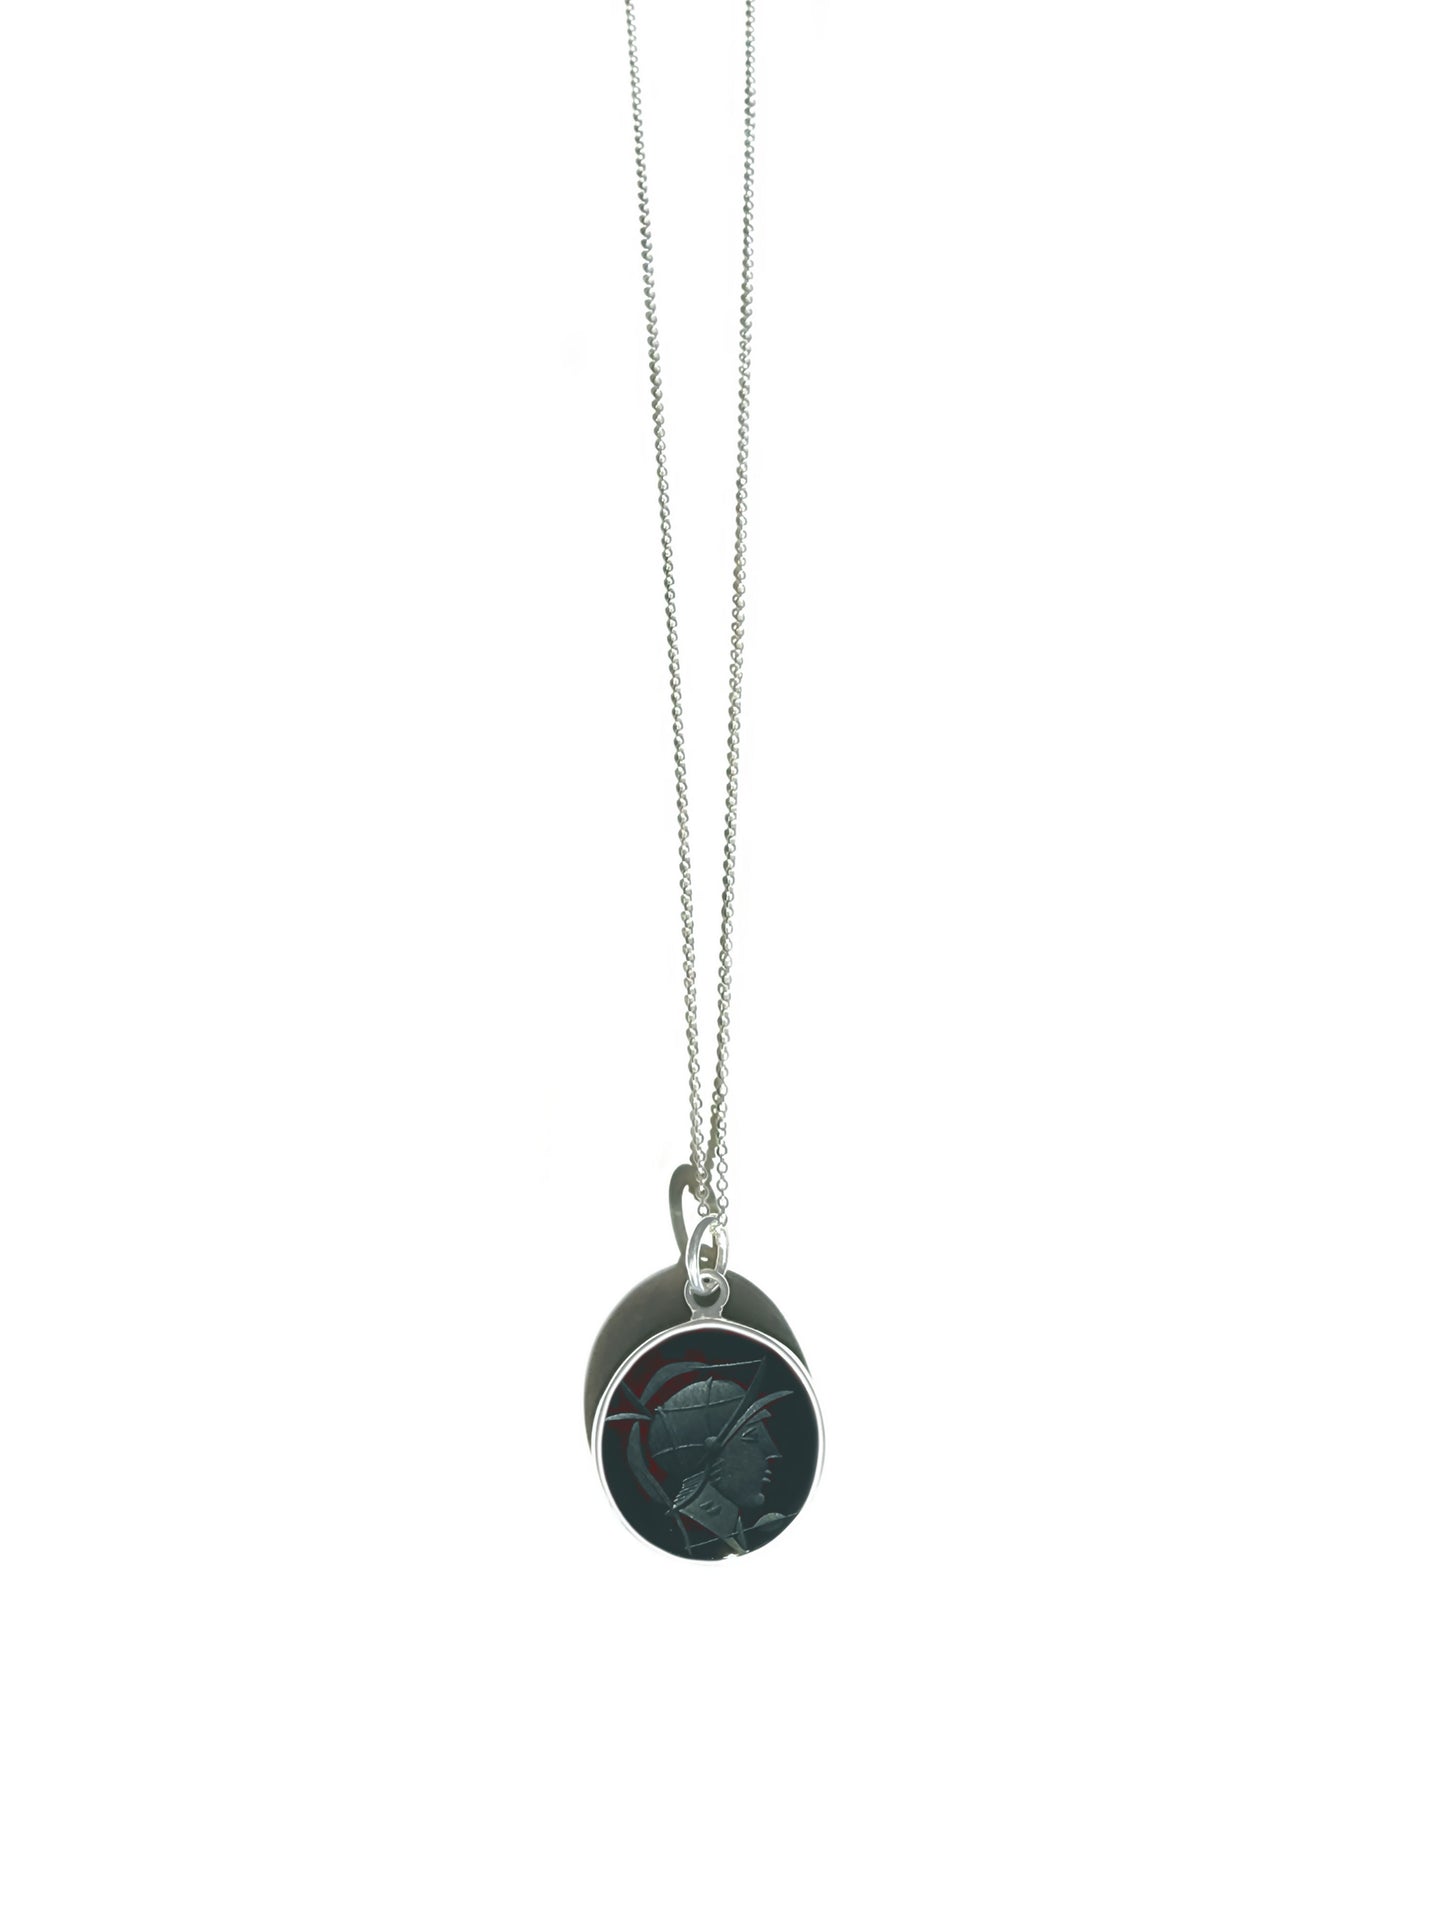 Black Onyx Warrior Intaglio Necklace in Sterling Silver